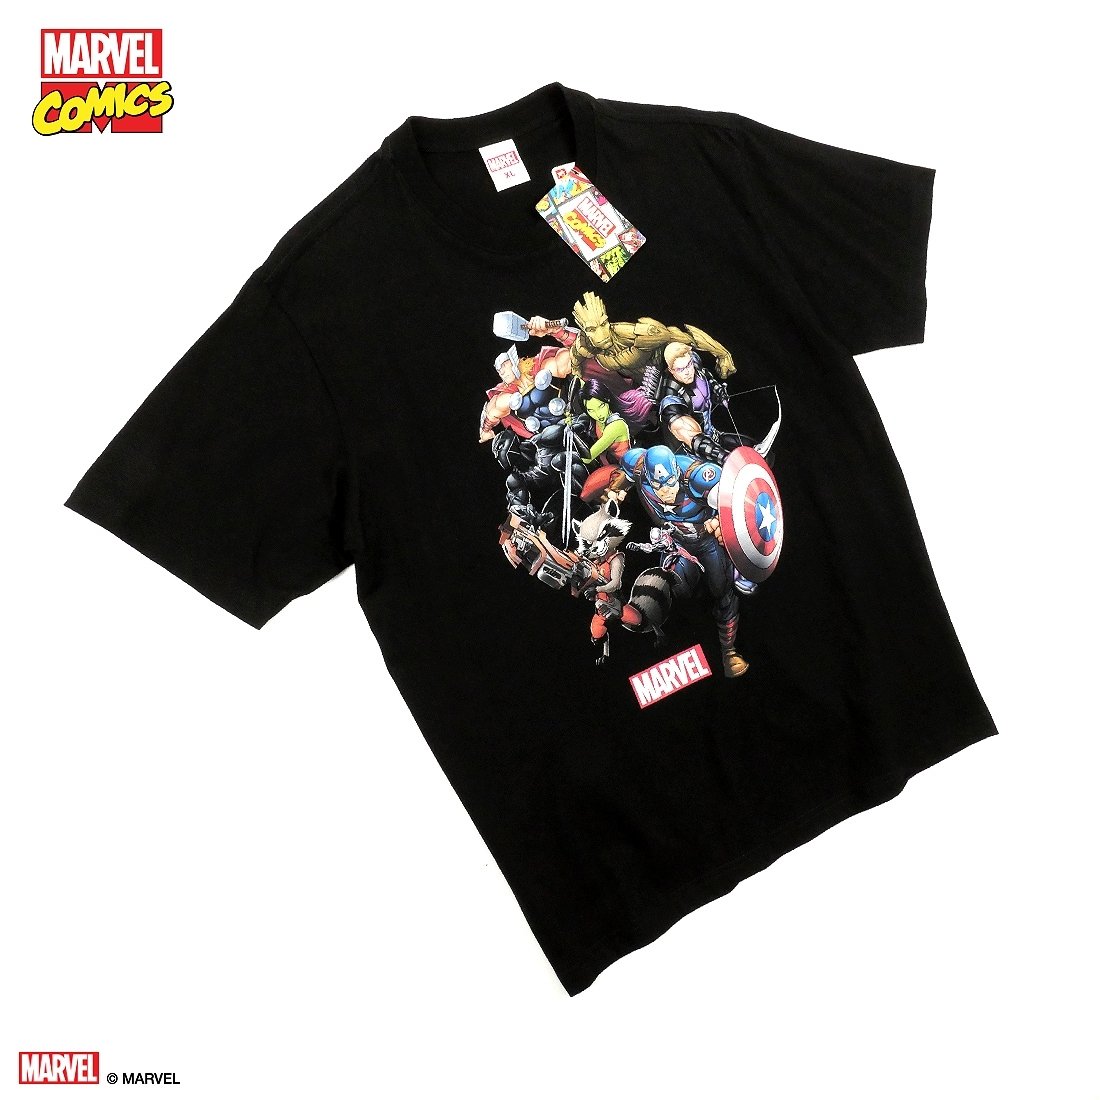 Avengers power7shop T-shirt Marvel Comics -